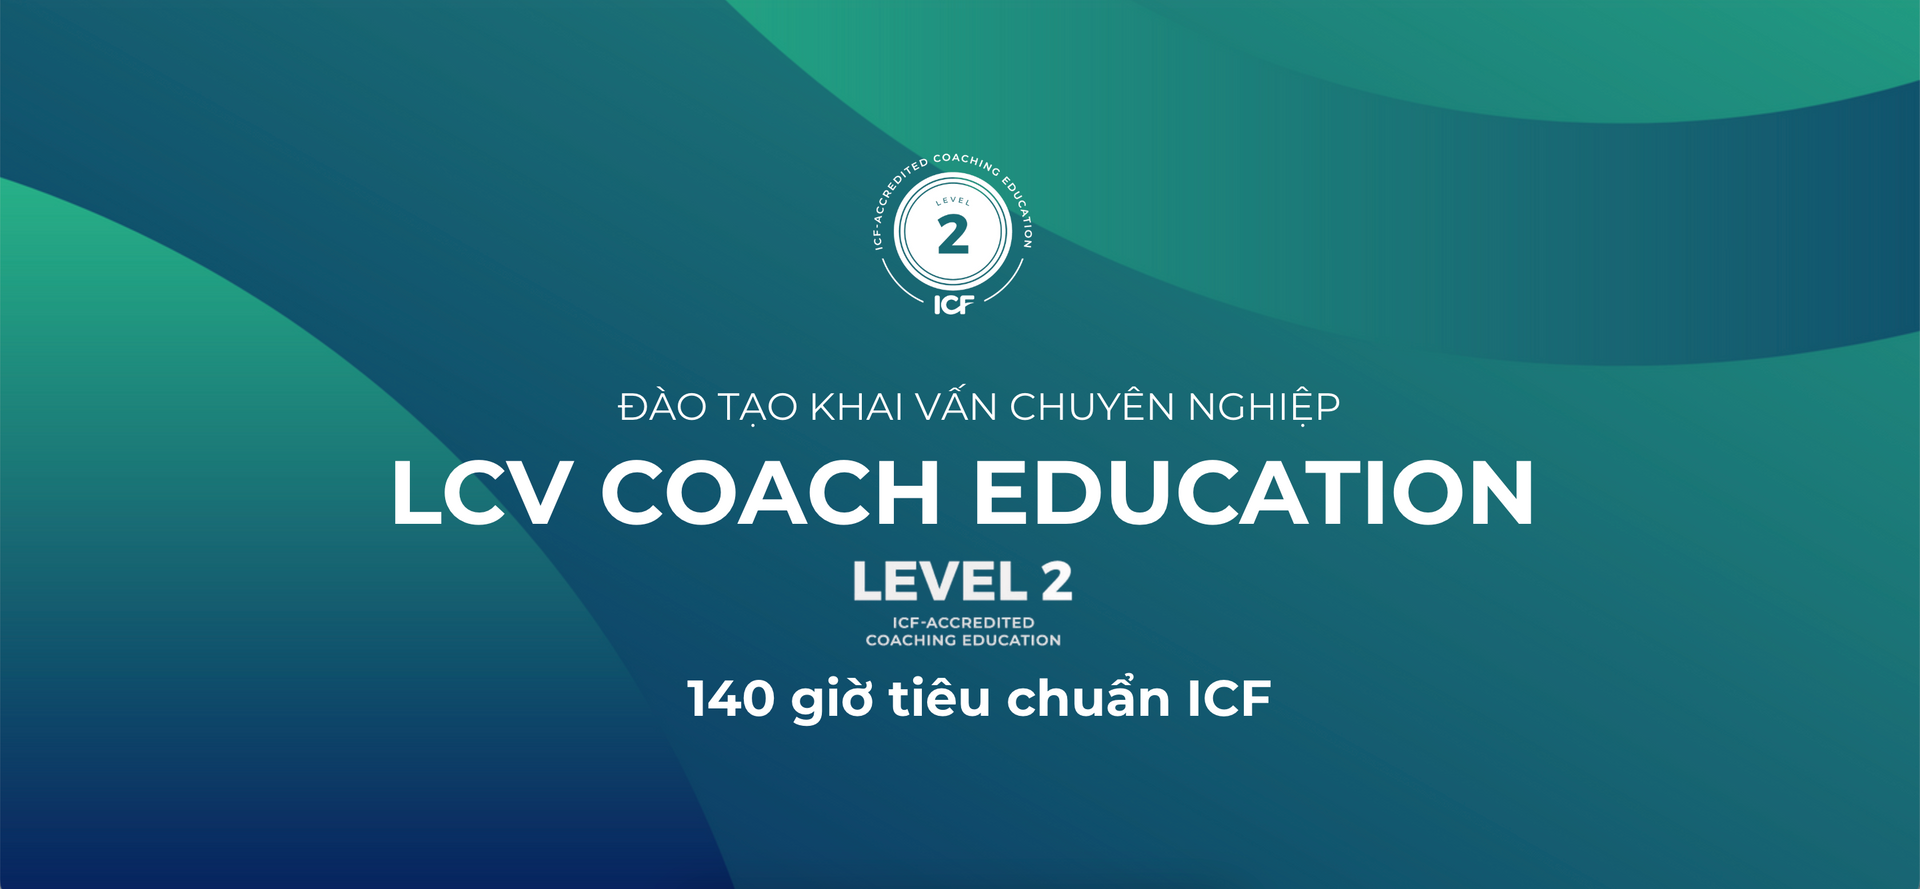 LCV Coach Education Level 2